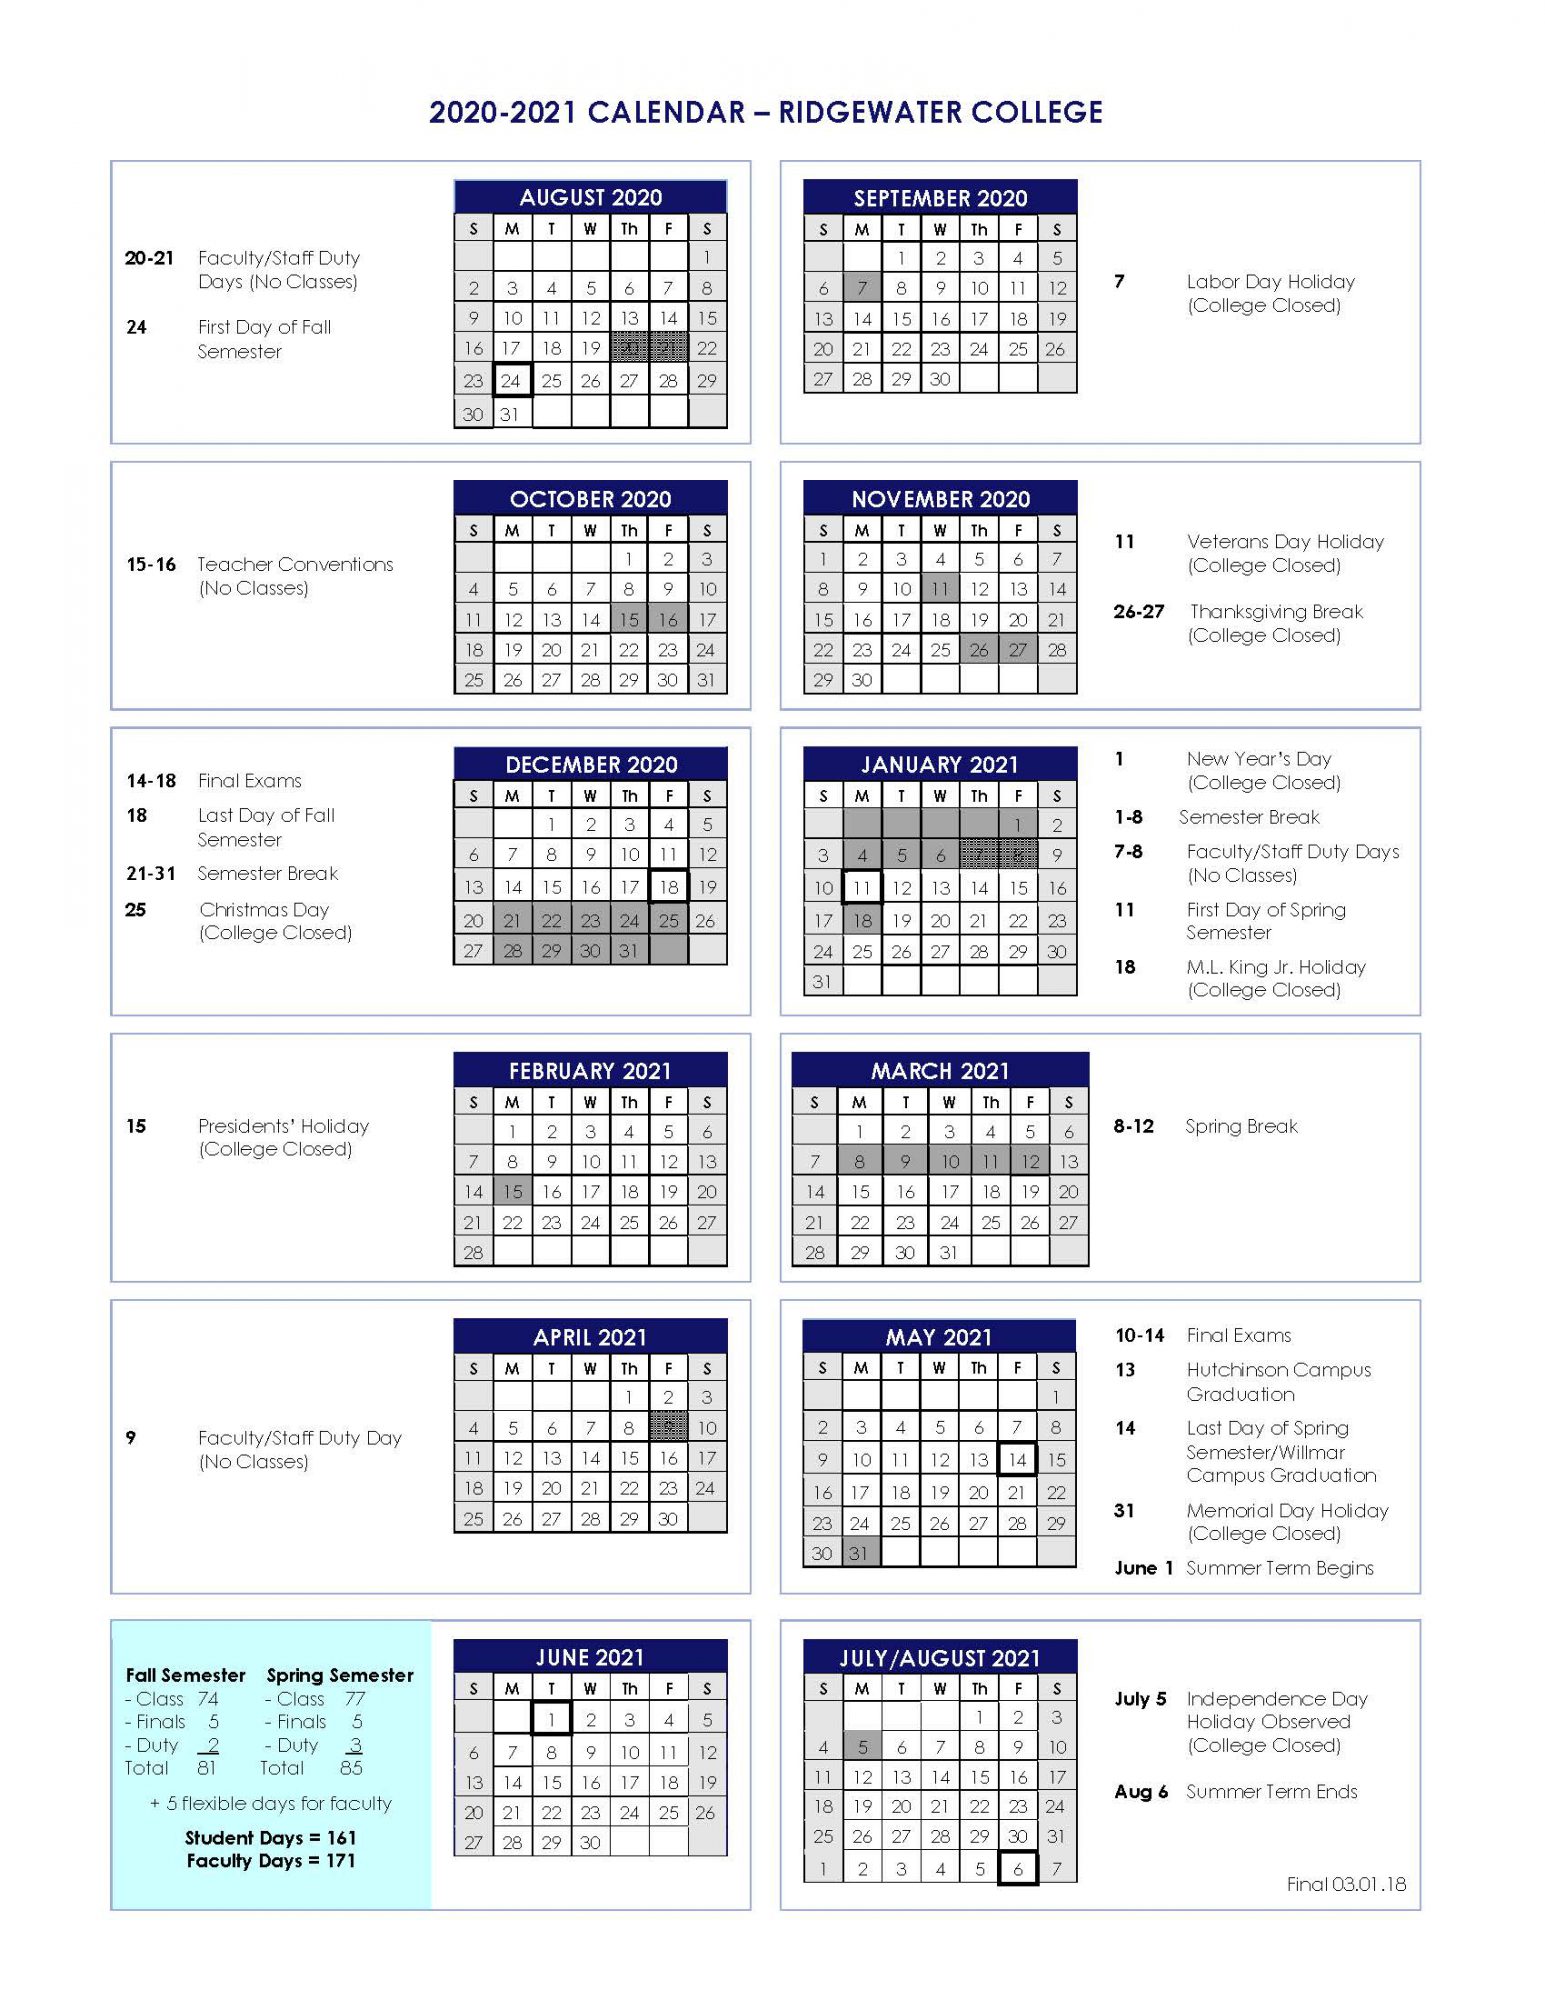 2021 congressional calendar 2020 2021 Academic Calendar Ridgewater College 2021 congressional calendar